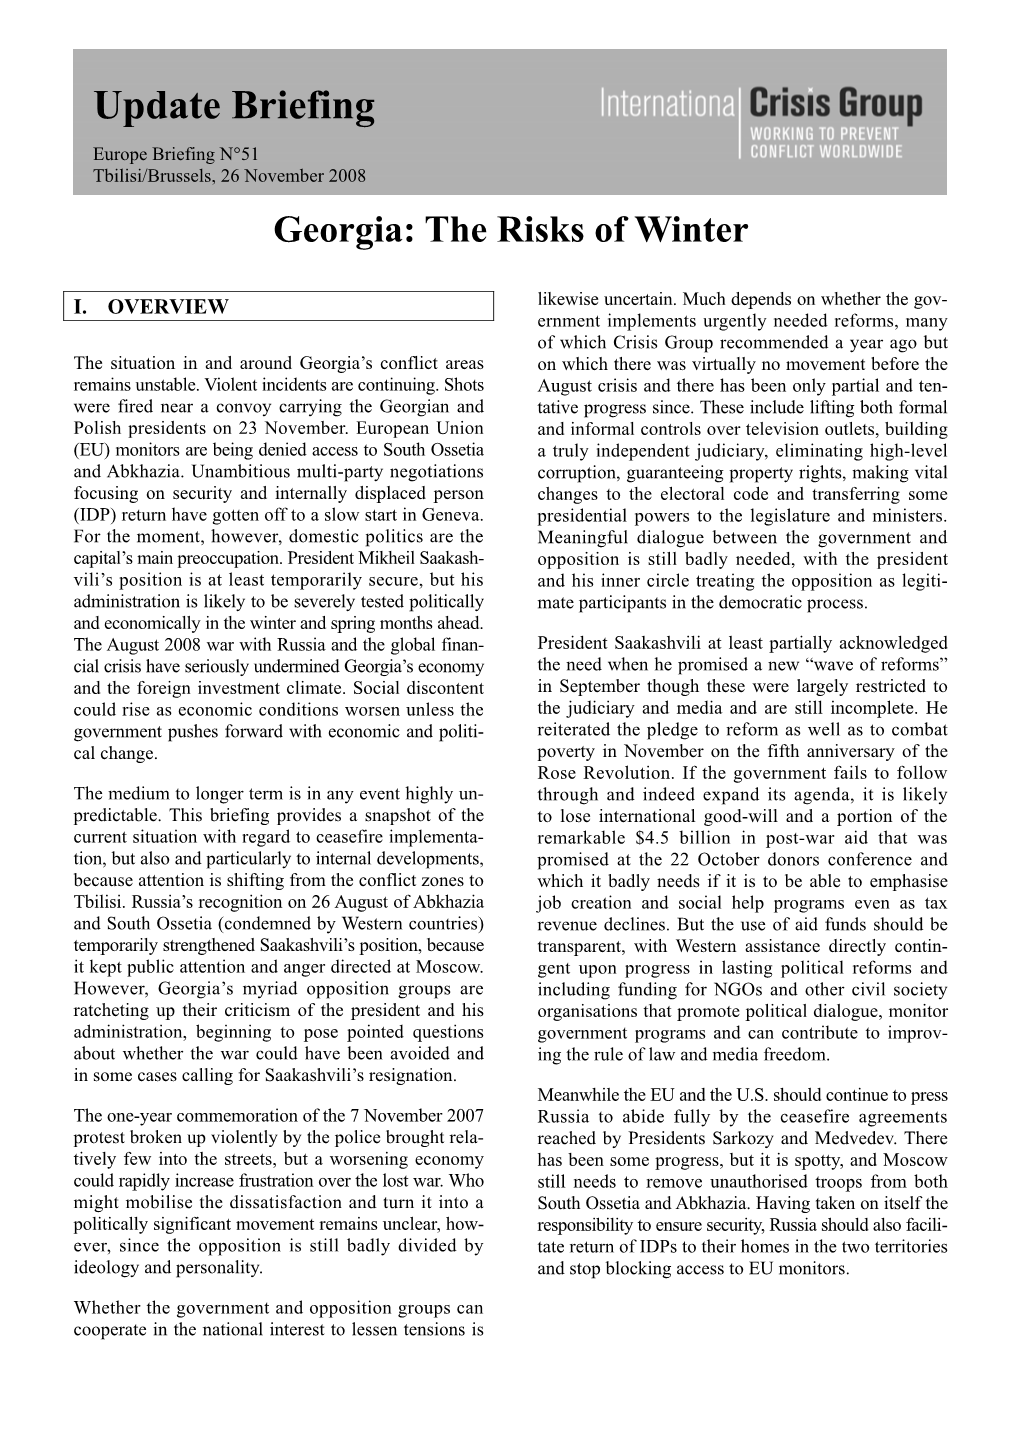 Georgia: the Risks of Winter